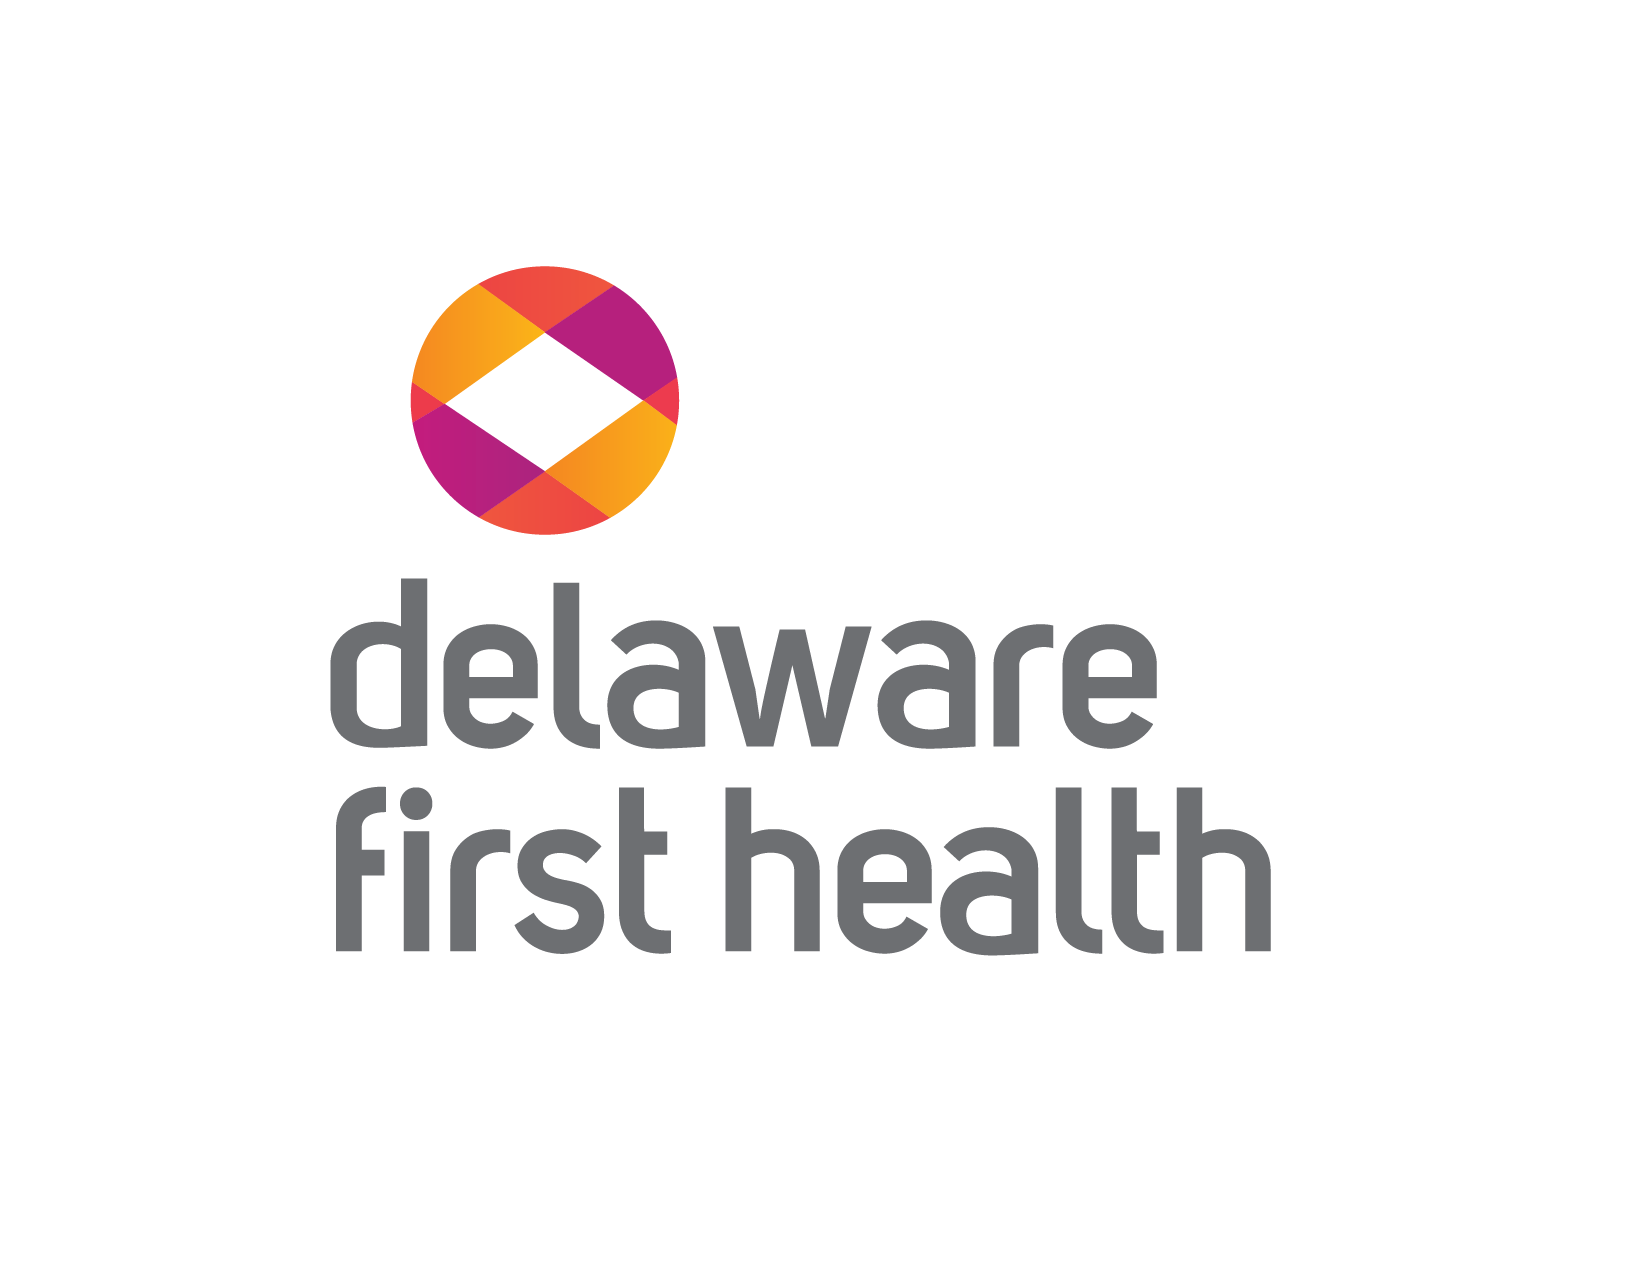 Delaware First Health logo